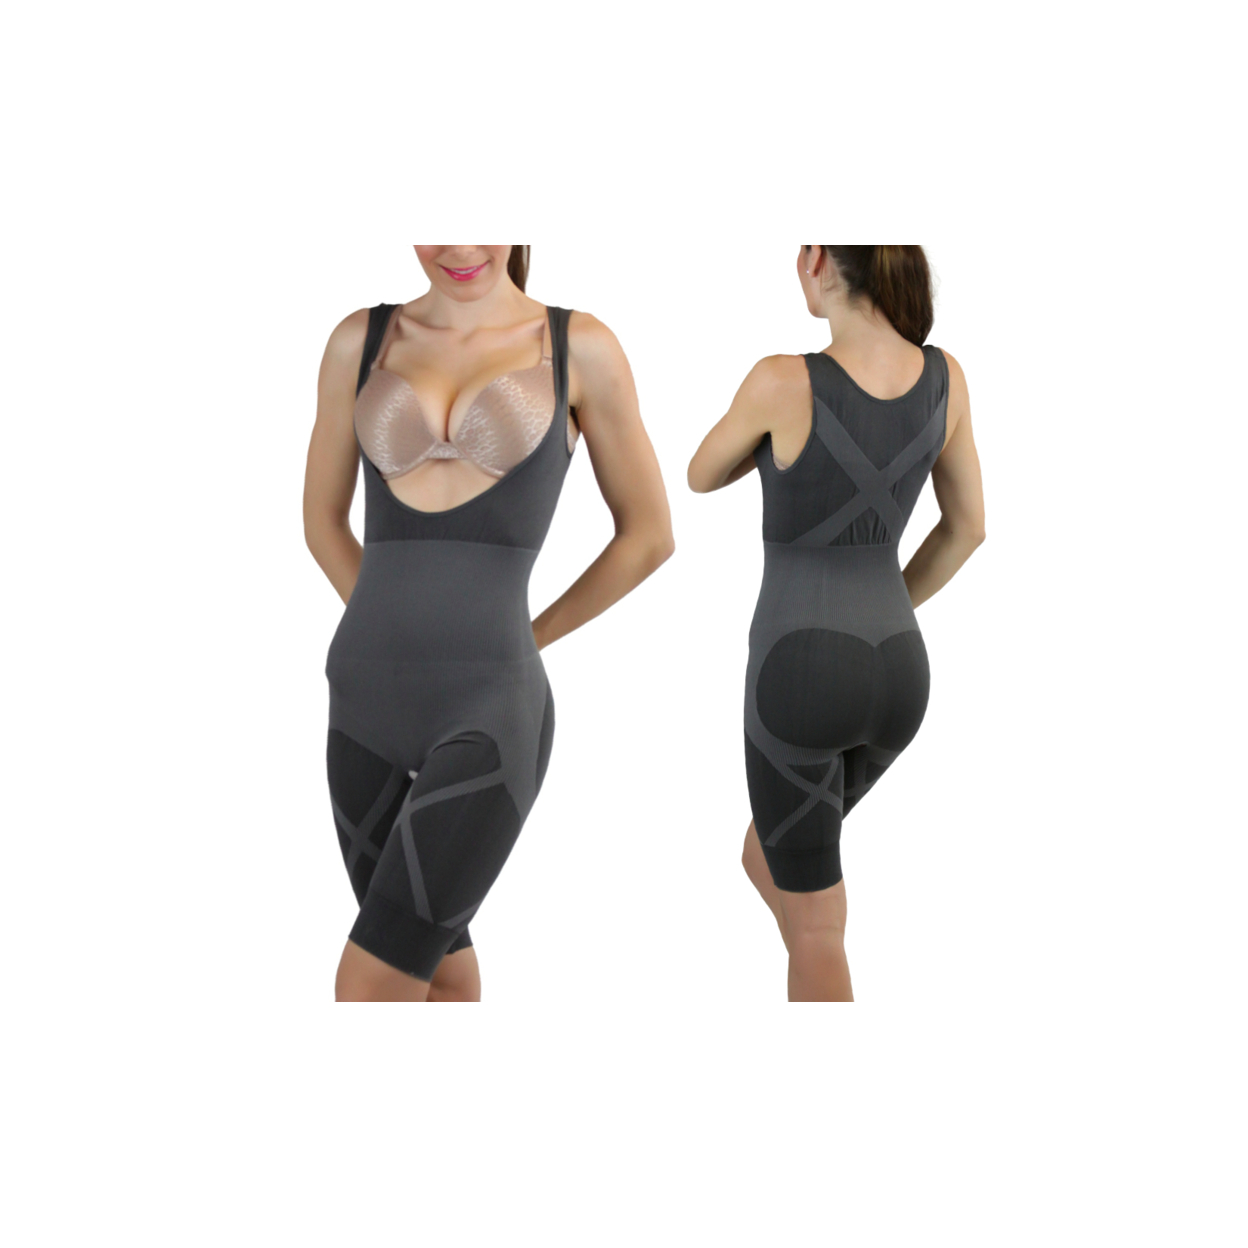 Women's Bamboo Slimming Body Suit Shaper - Gray, L/XL